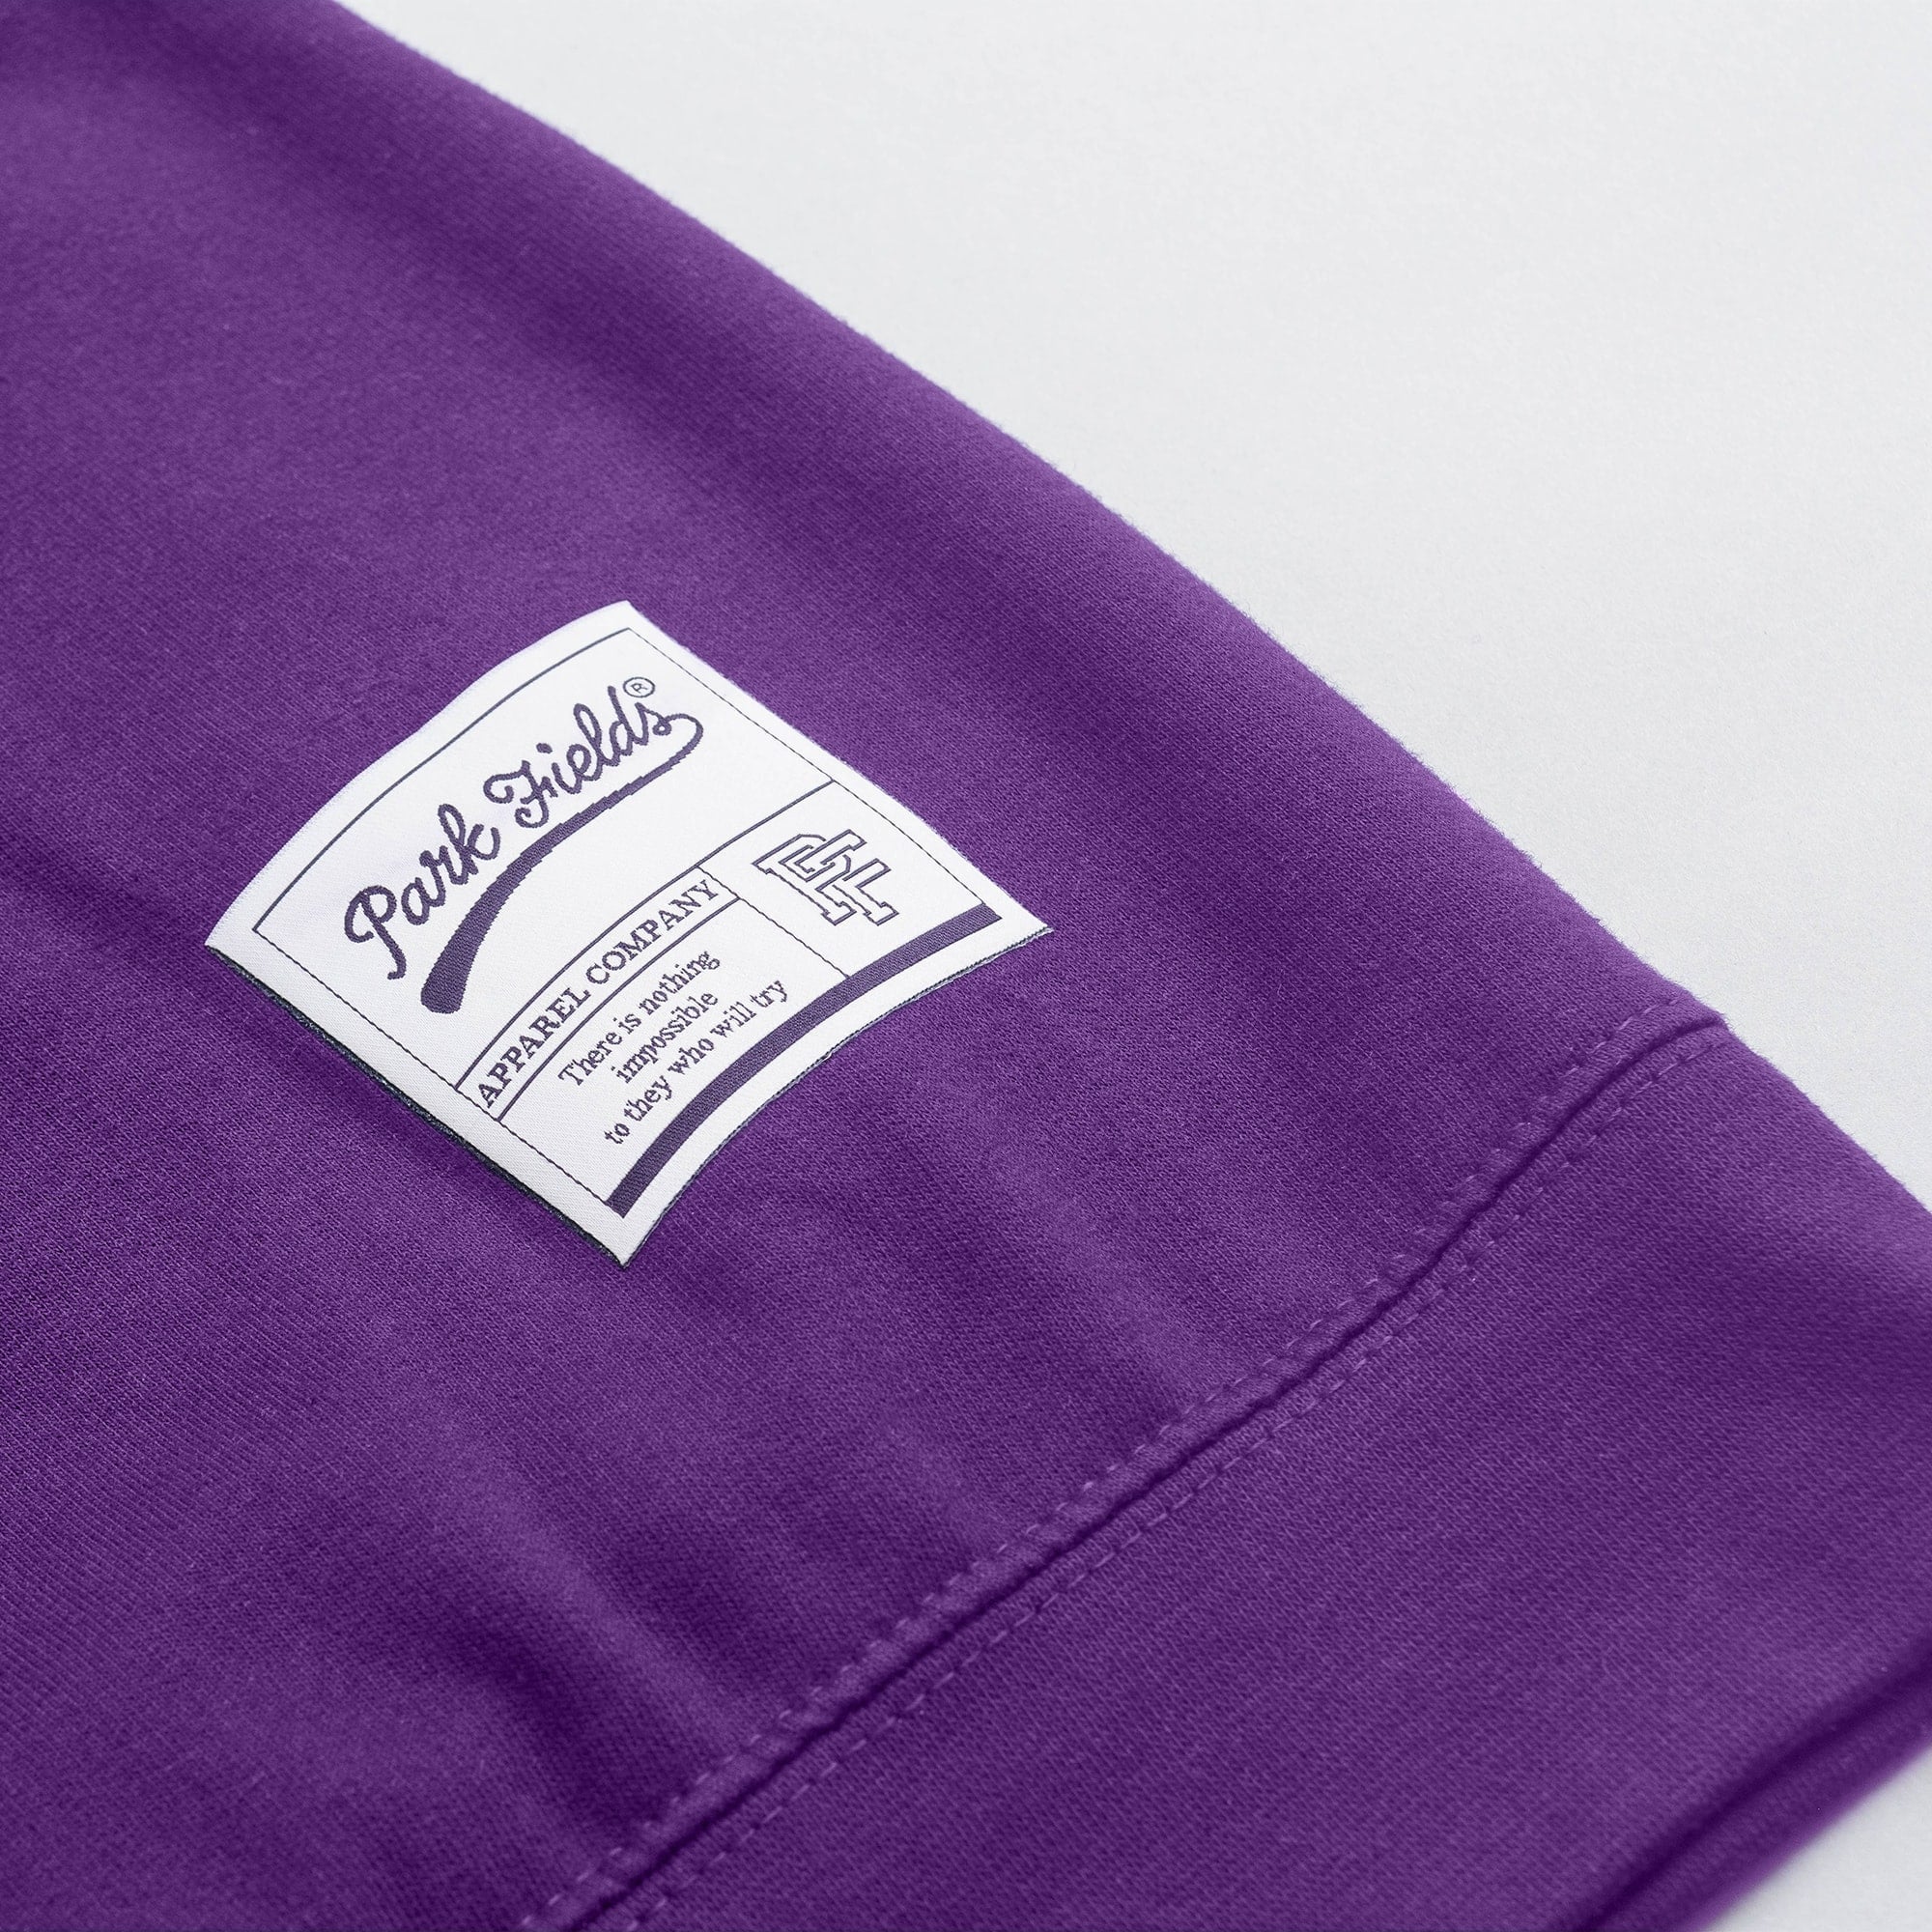 New York University Purple Sweatshirt